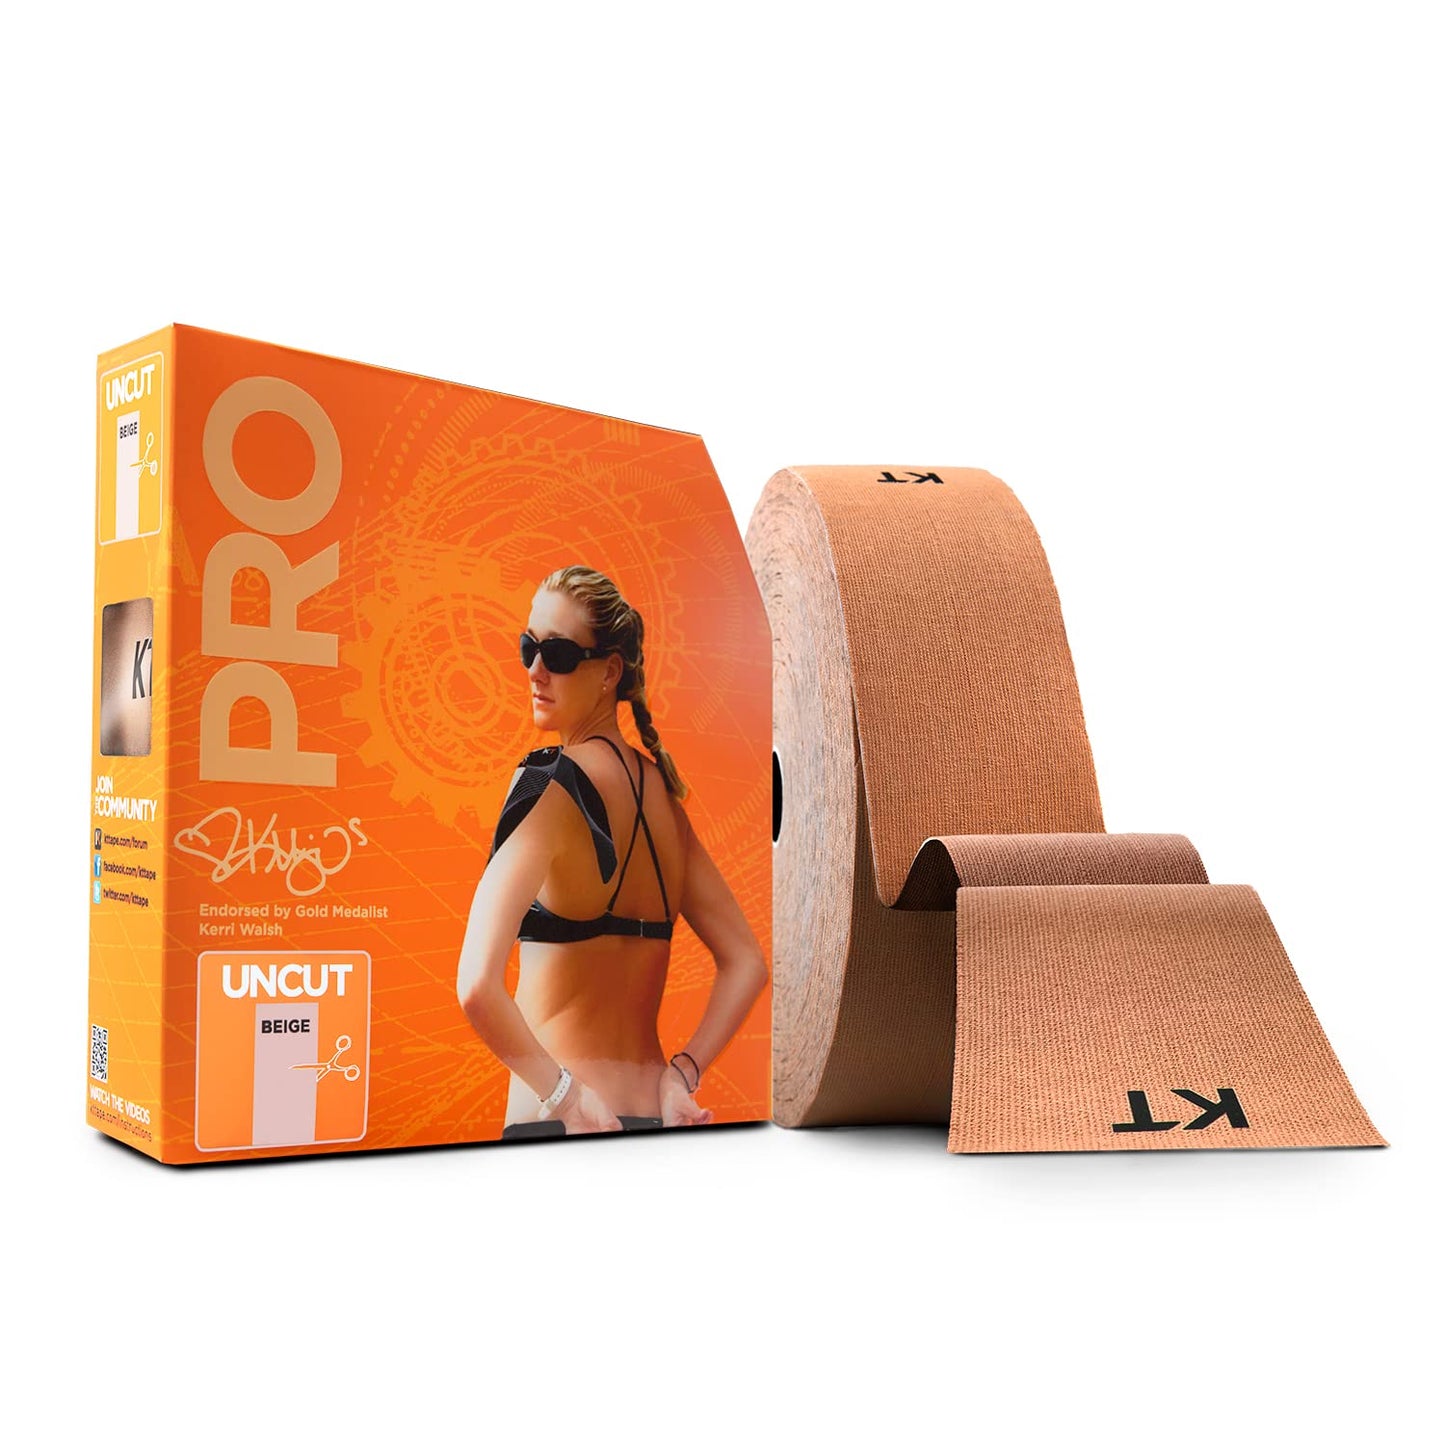 Li-Ning Pro Jumbo KT Tape Roll Uncut(125 Feet) - Stealth Beige - Best Price online Prokicksports.com